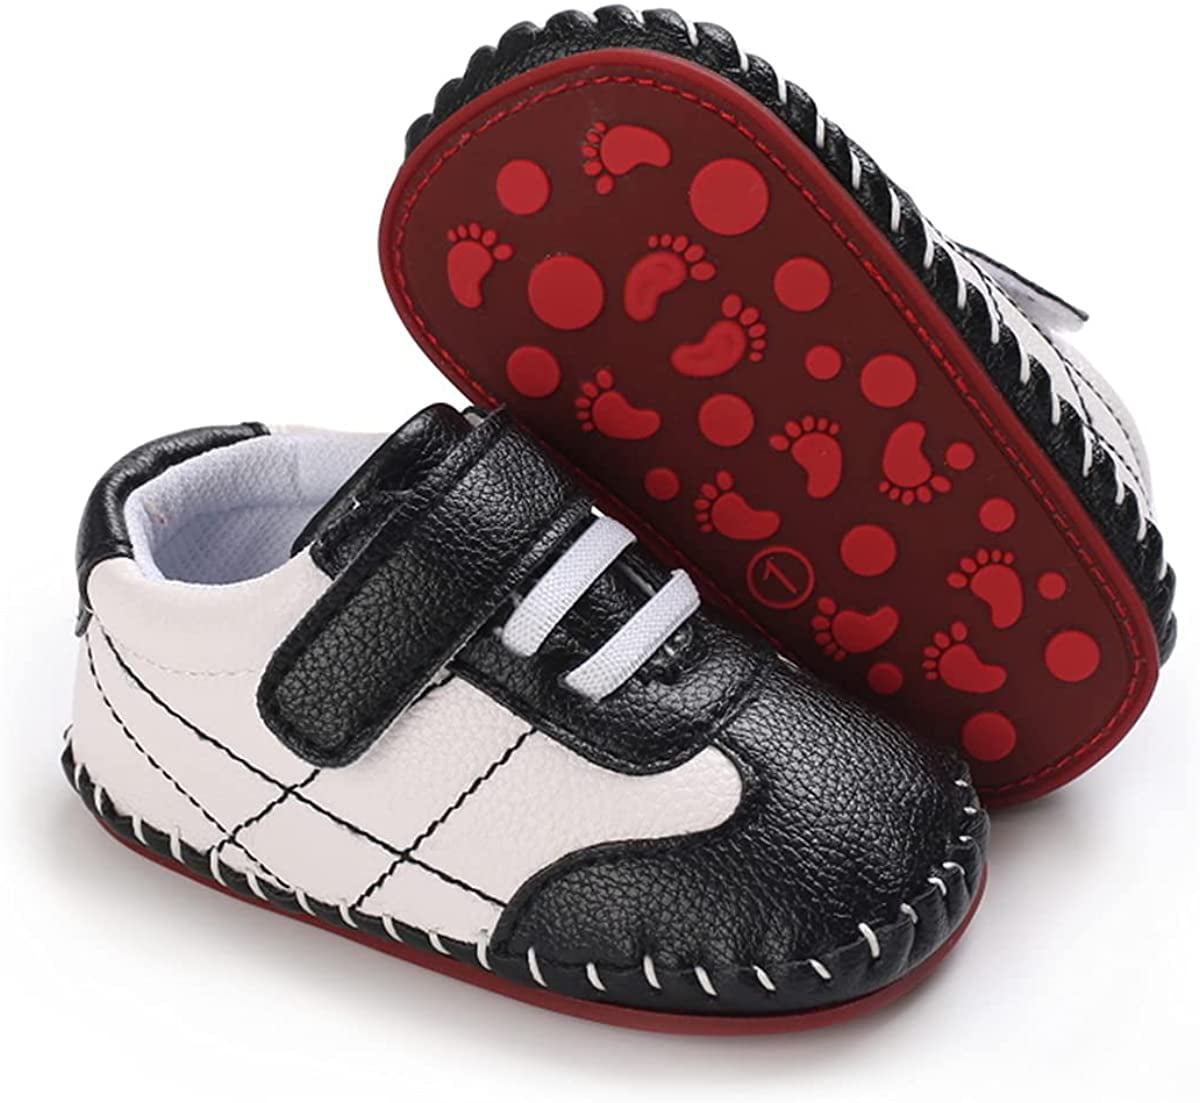 LAFEGEN Baby Boy Girl Walking Shoes Non Slip Hard Bottom Infant High Top Sneaker PU Leather Moccasins Toddler First Walker Crib Dress Tennis Shoes 3-18 Months 